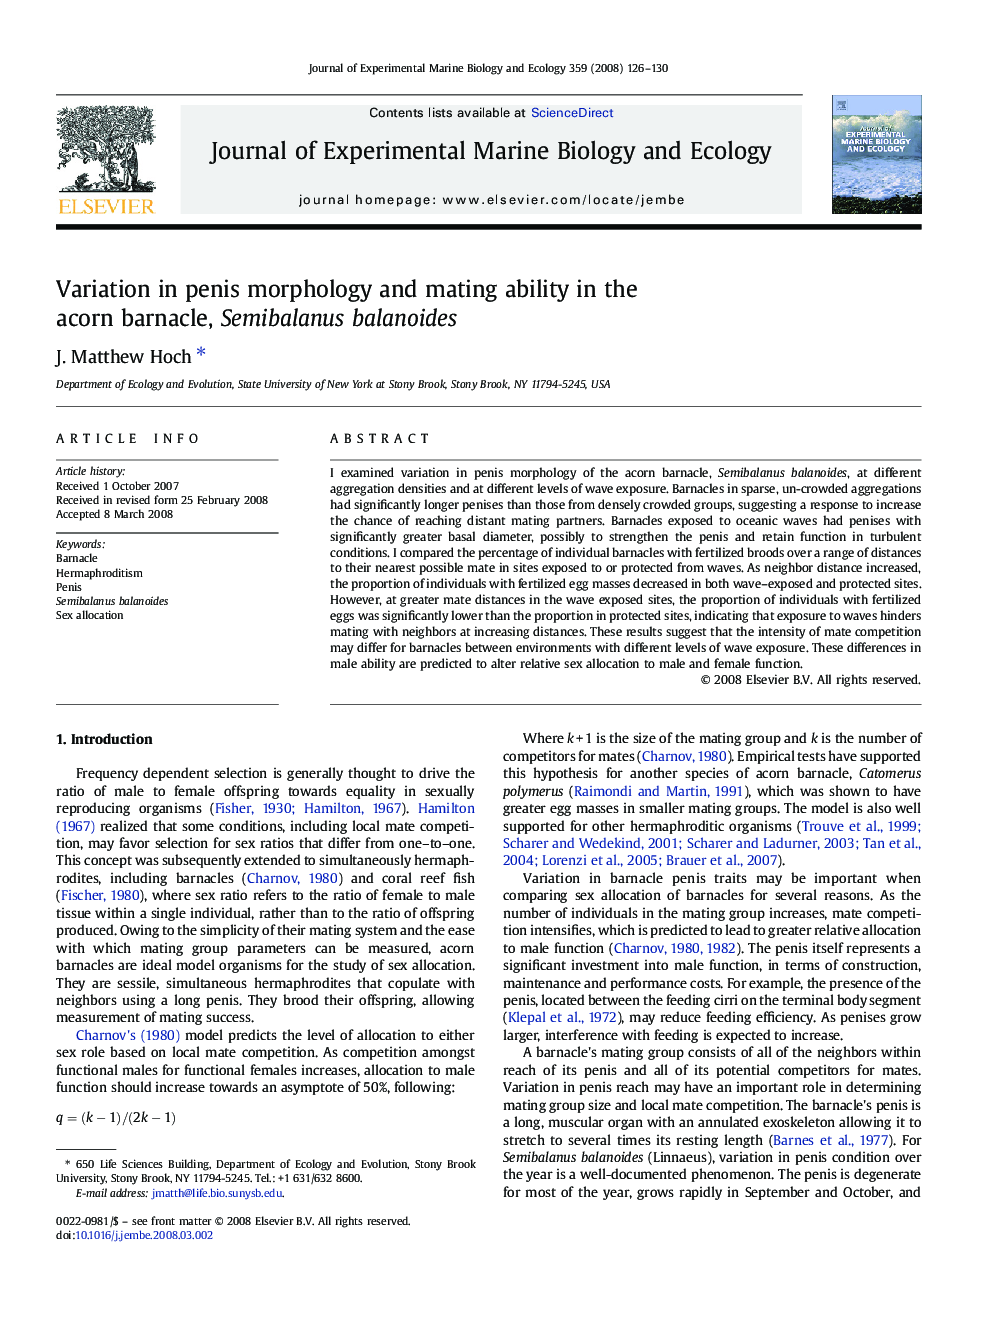 Variation in penis morphology and mating ability in the acorn barnacle, Semibalanus balanoides